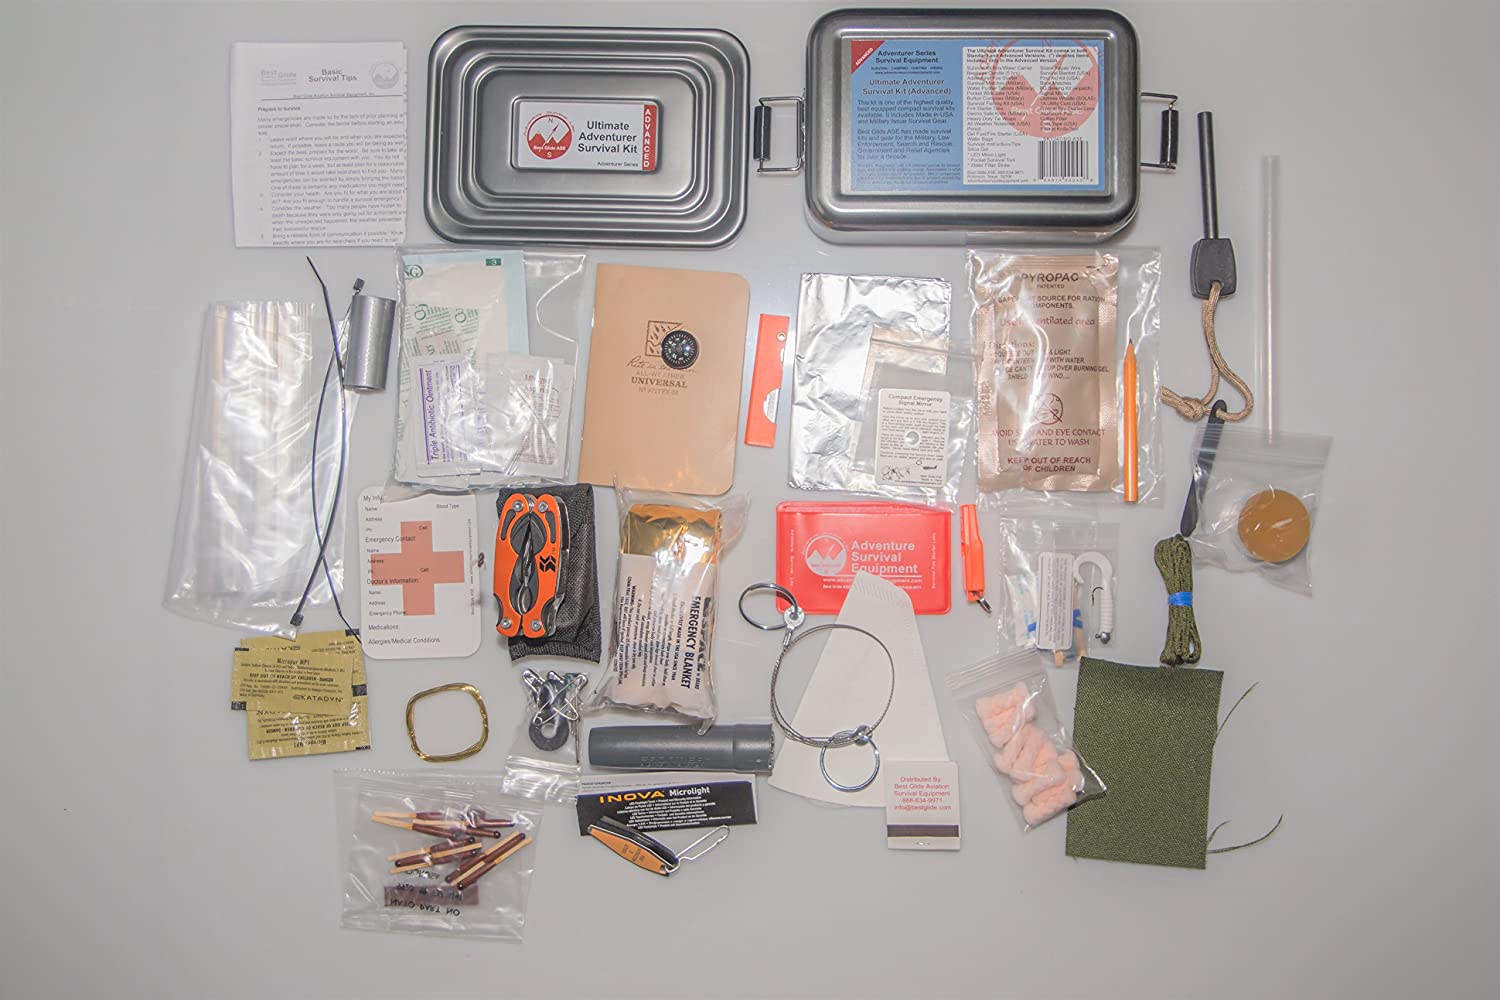 Best Glide Ase Adventurer Survival Kit Box